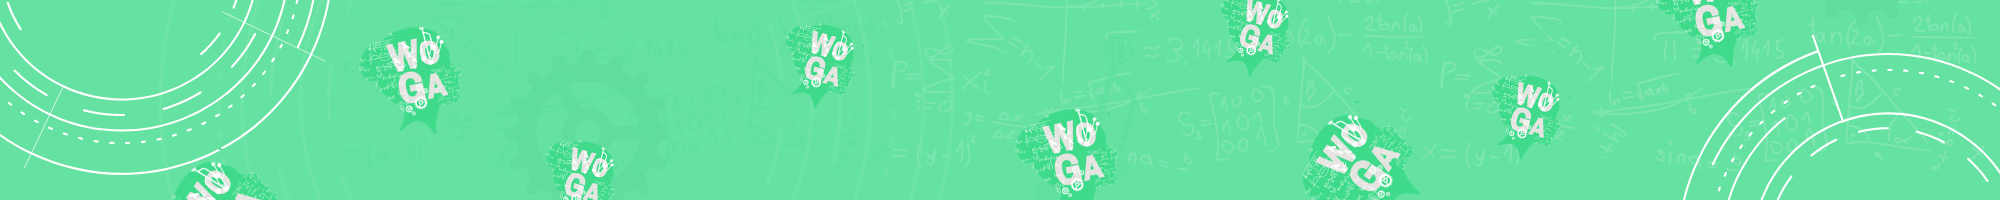 WoGa banner downloads